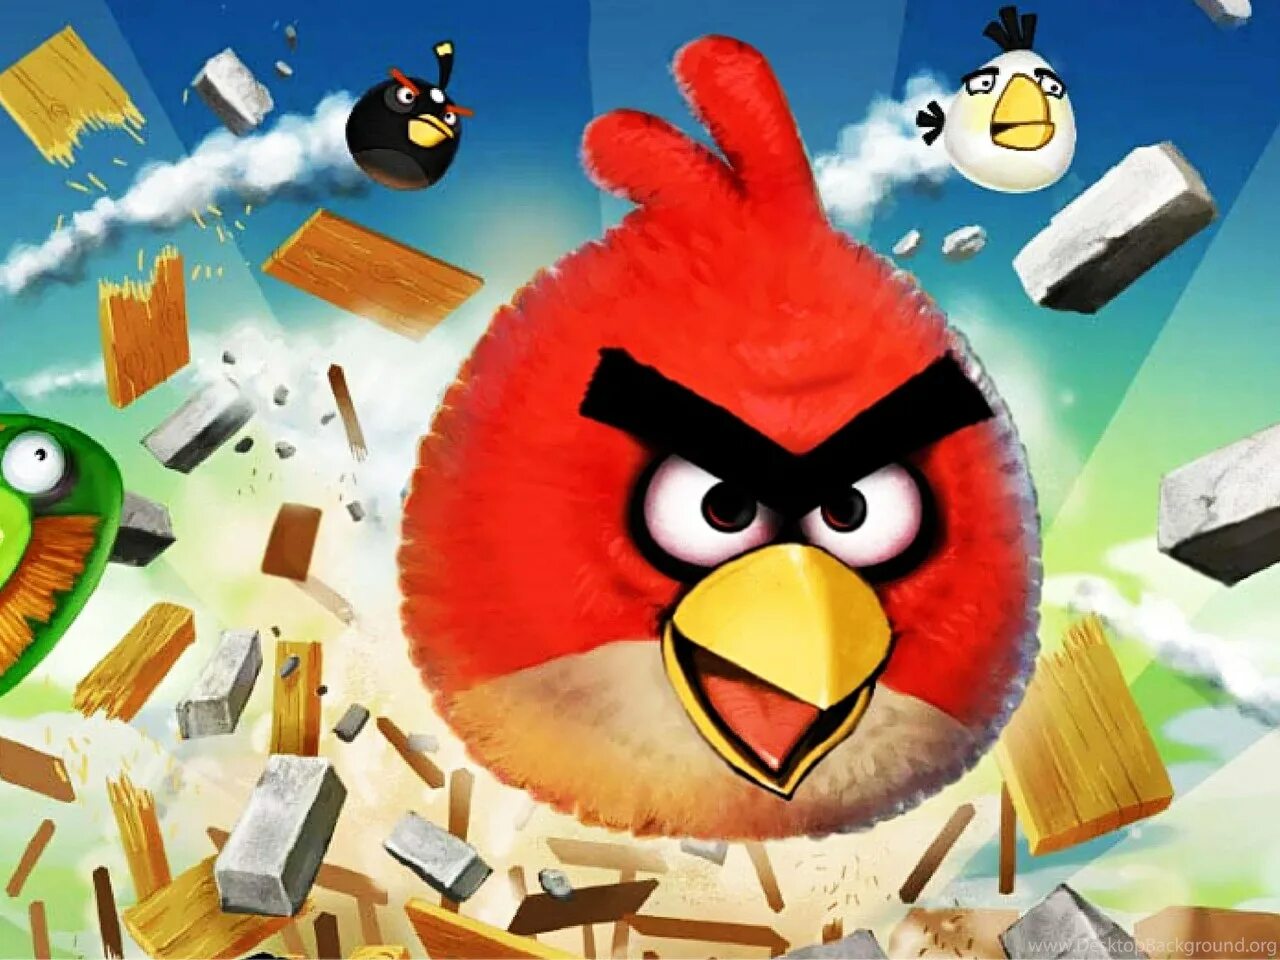 Игра Angry Birds Classic. Angry Birds 2 игра. Rovio Энгри бердз. Энгри бердз Ледяная птица.